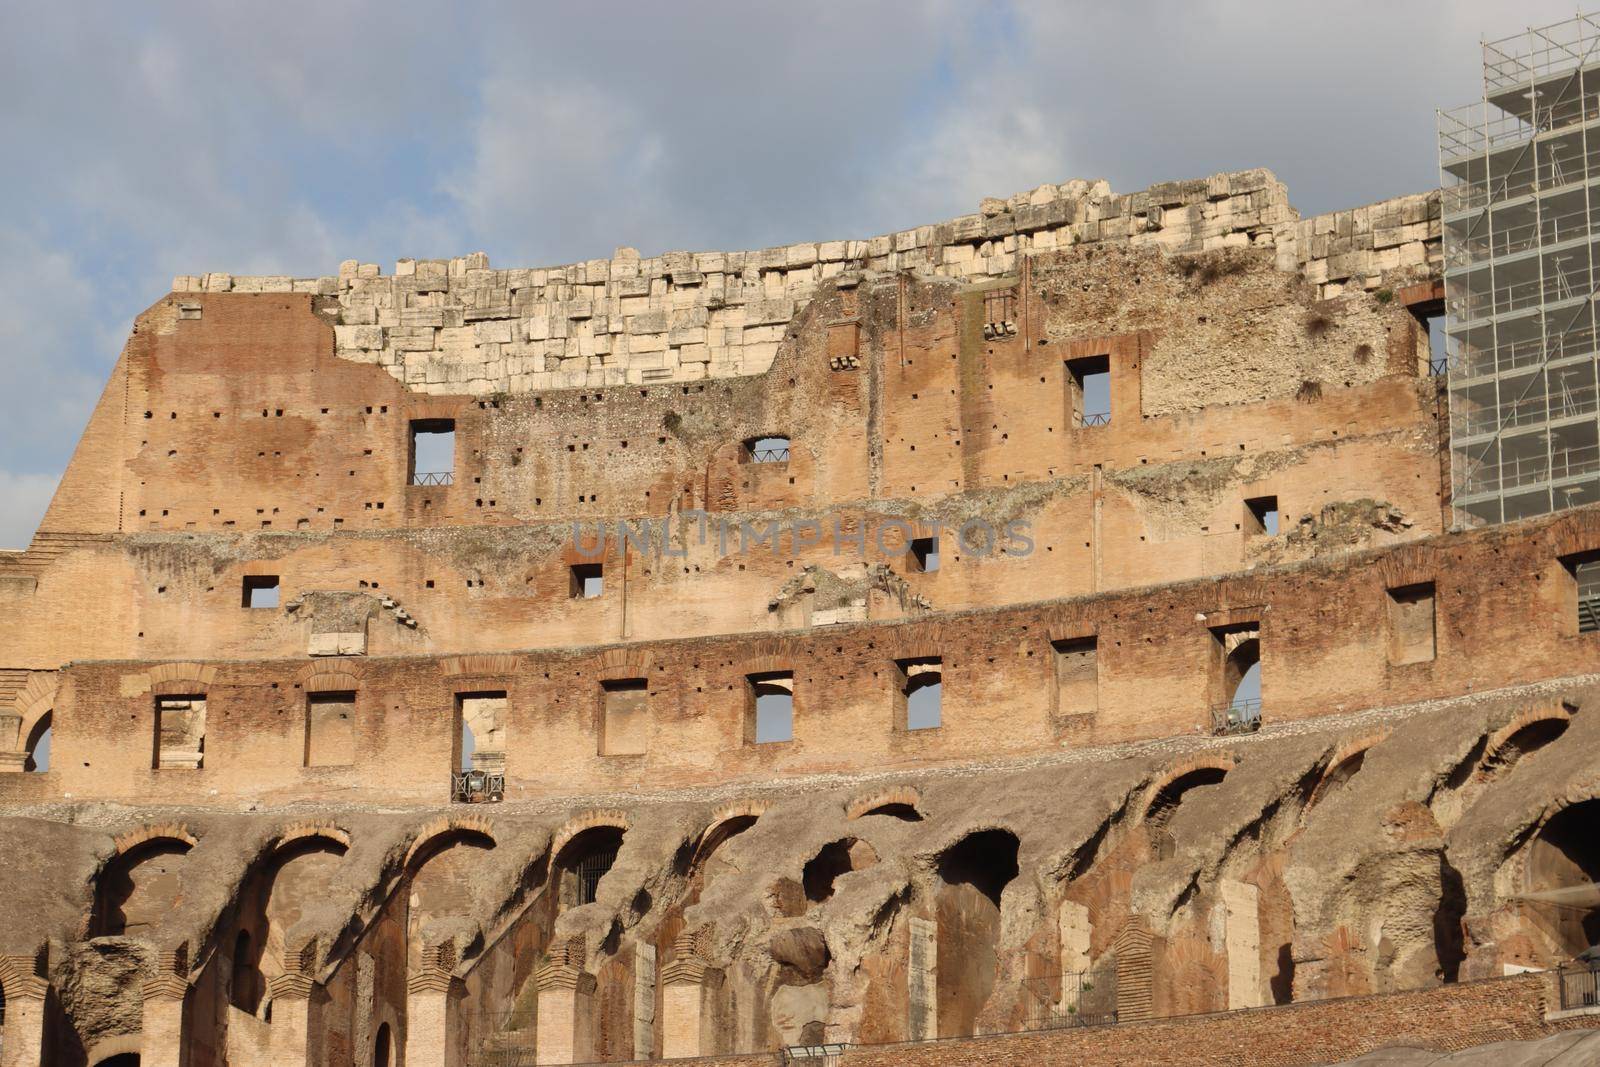 Colosseum of Rome by yohananegusse